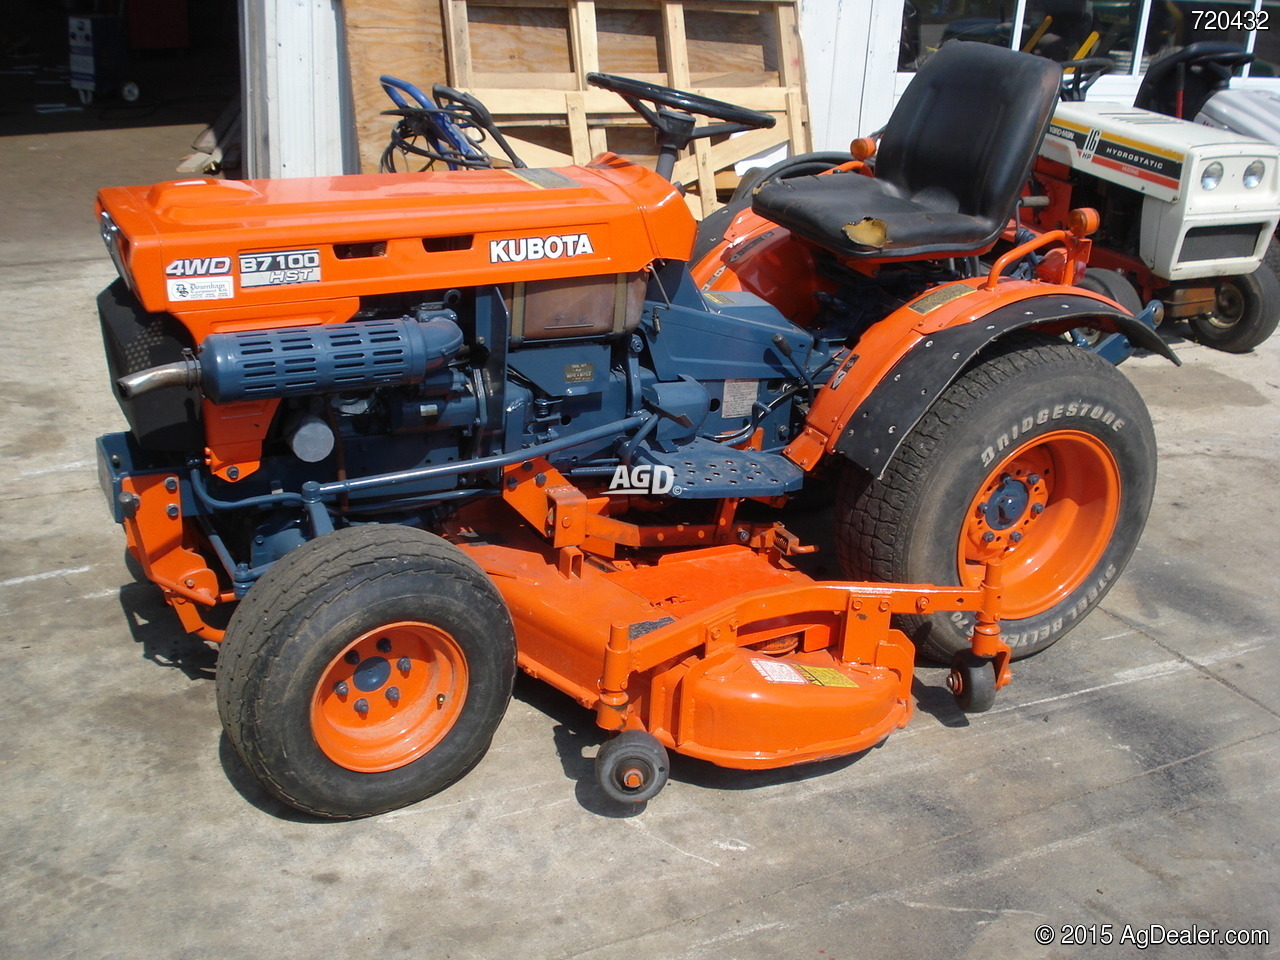 Kubota B7100 HST Tractor For Sale | AgDealer.com